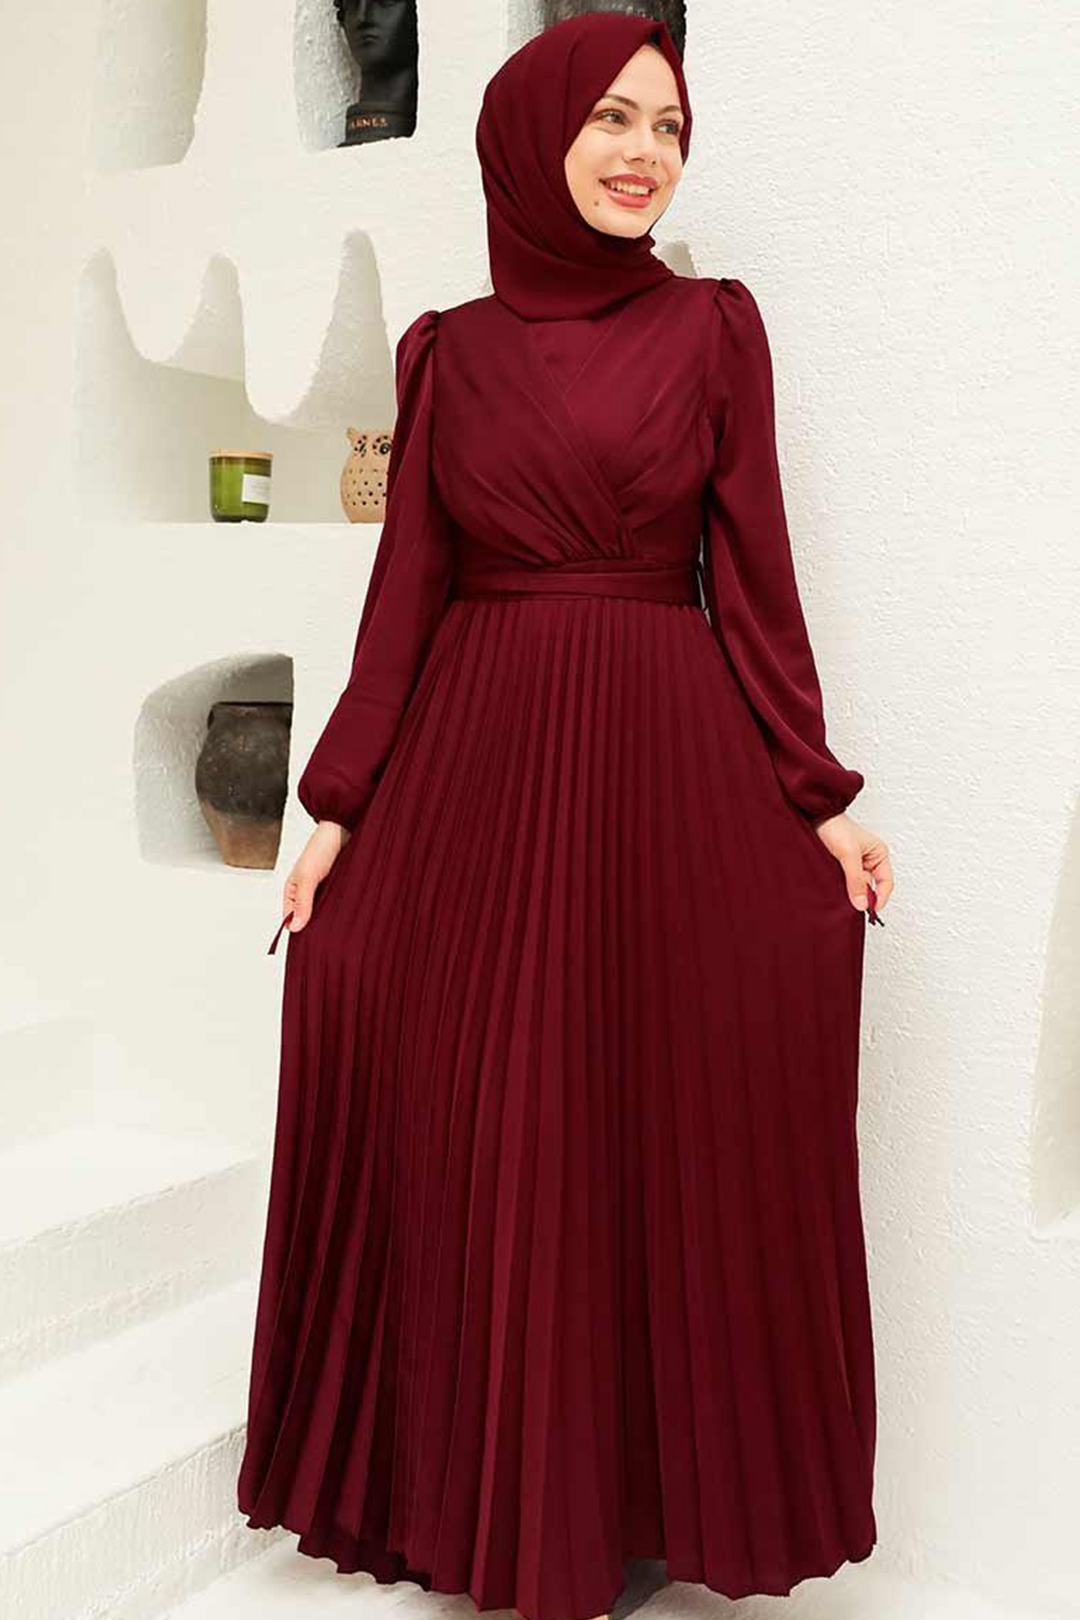 a woman wearing a maroon dress and hijab